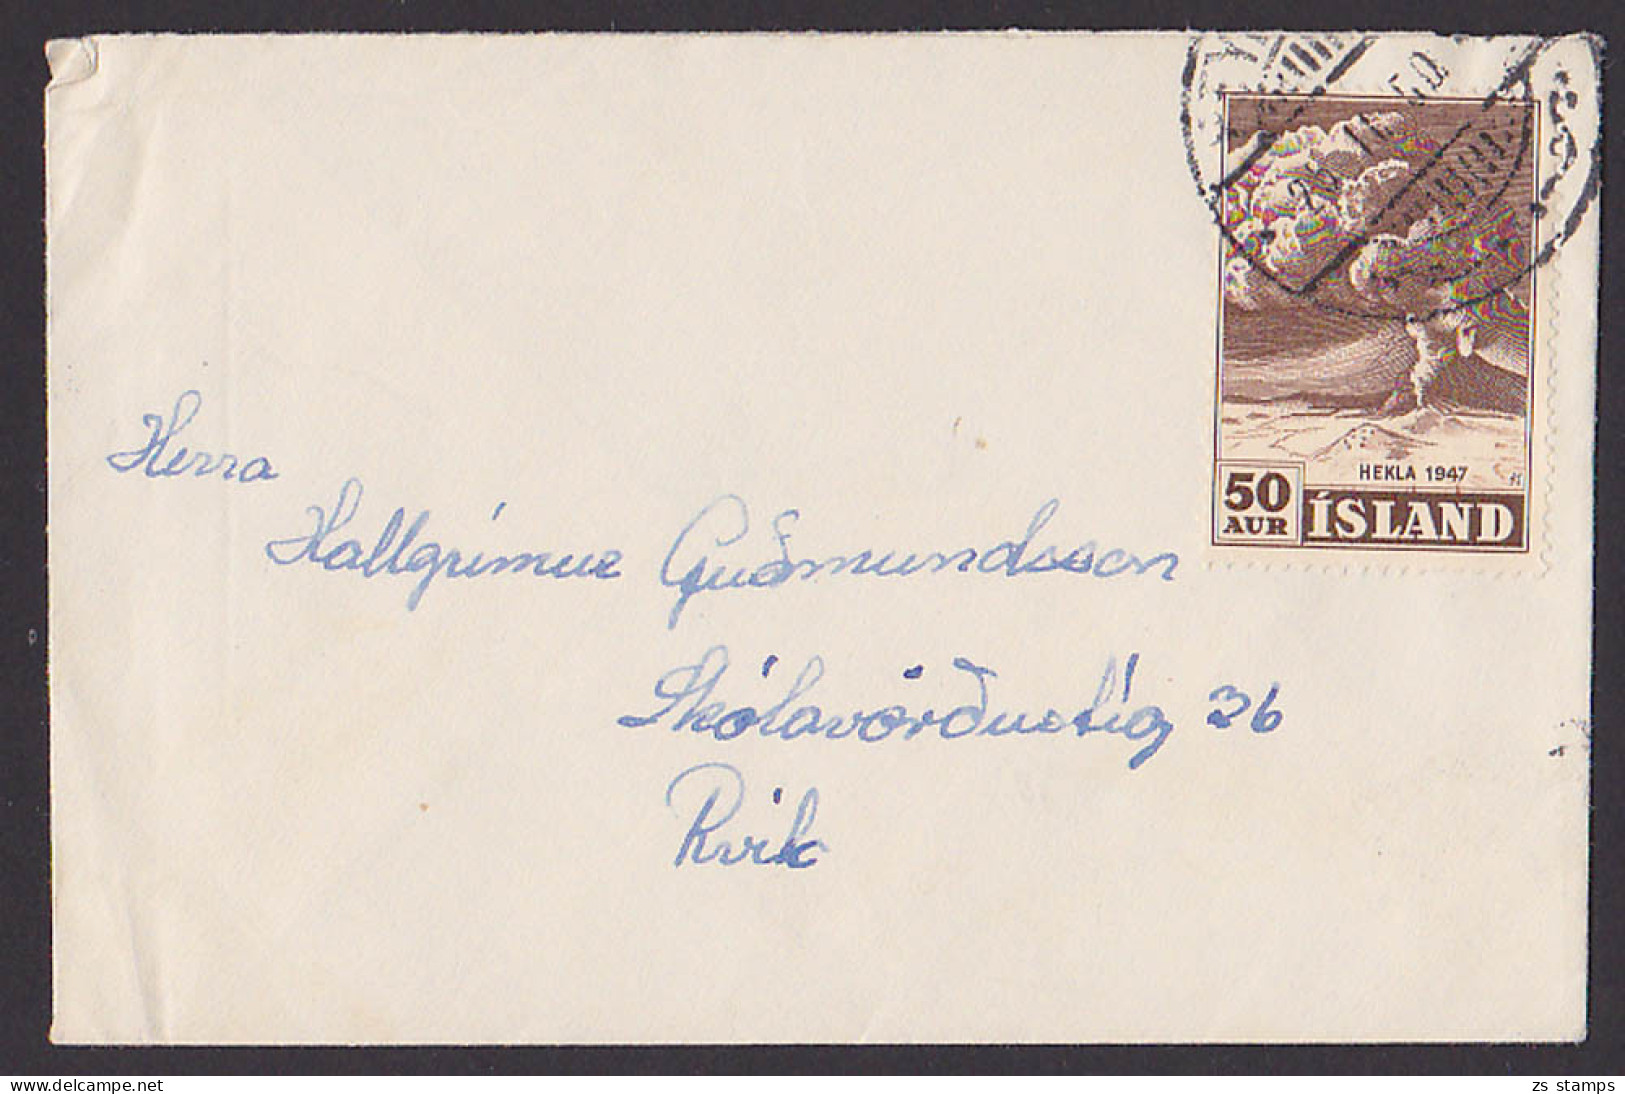 Island 50 AUR Hekla 1947 Lettre Cover Vulkan Minibrief - Briefe U. Dokumente